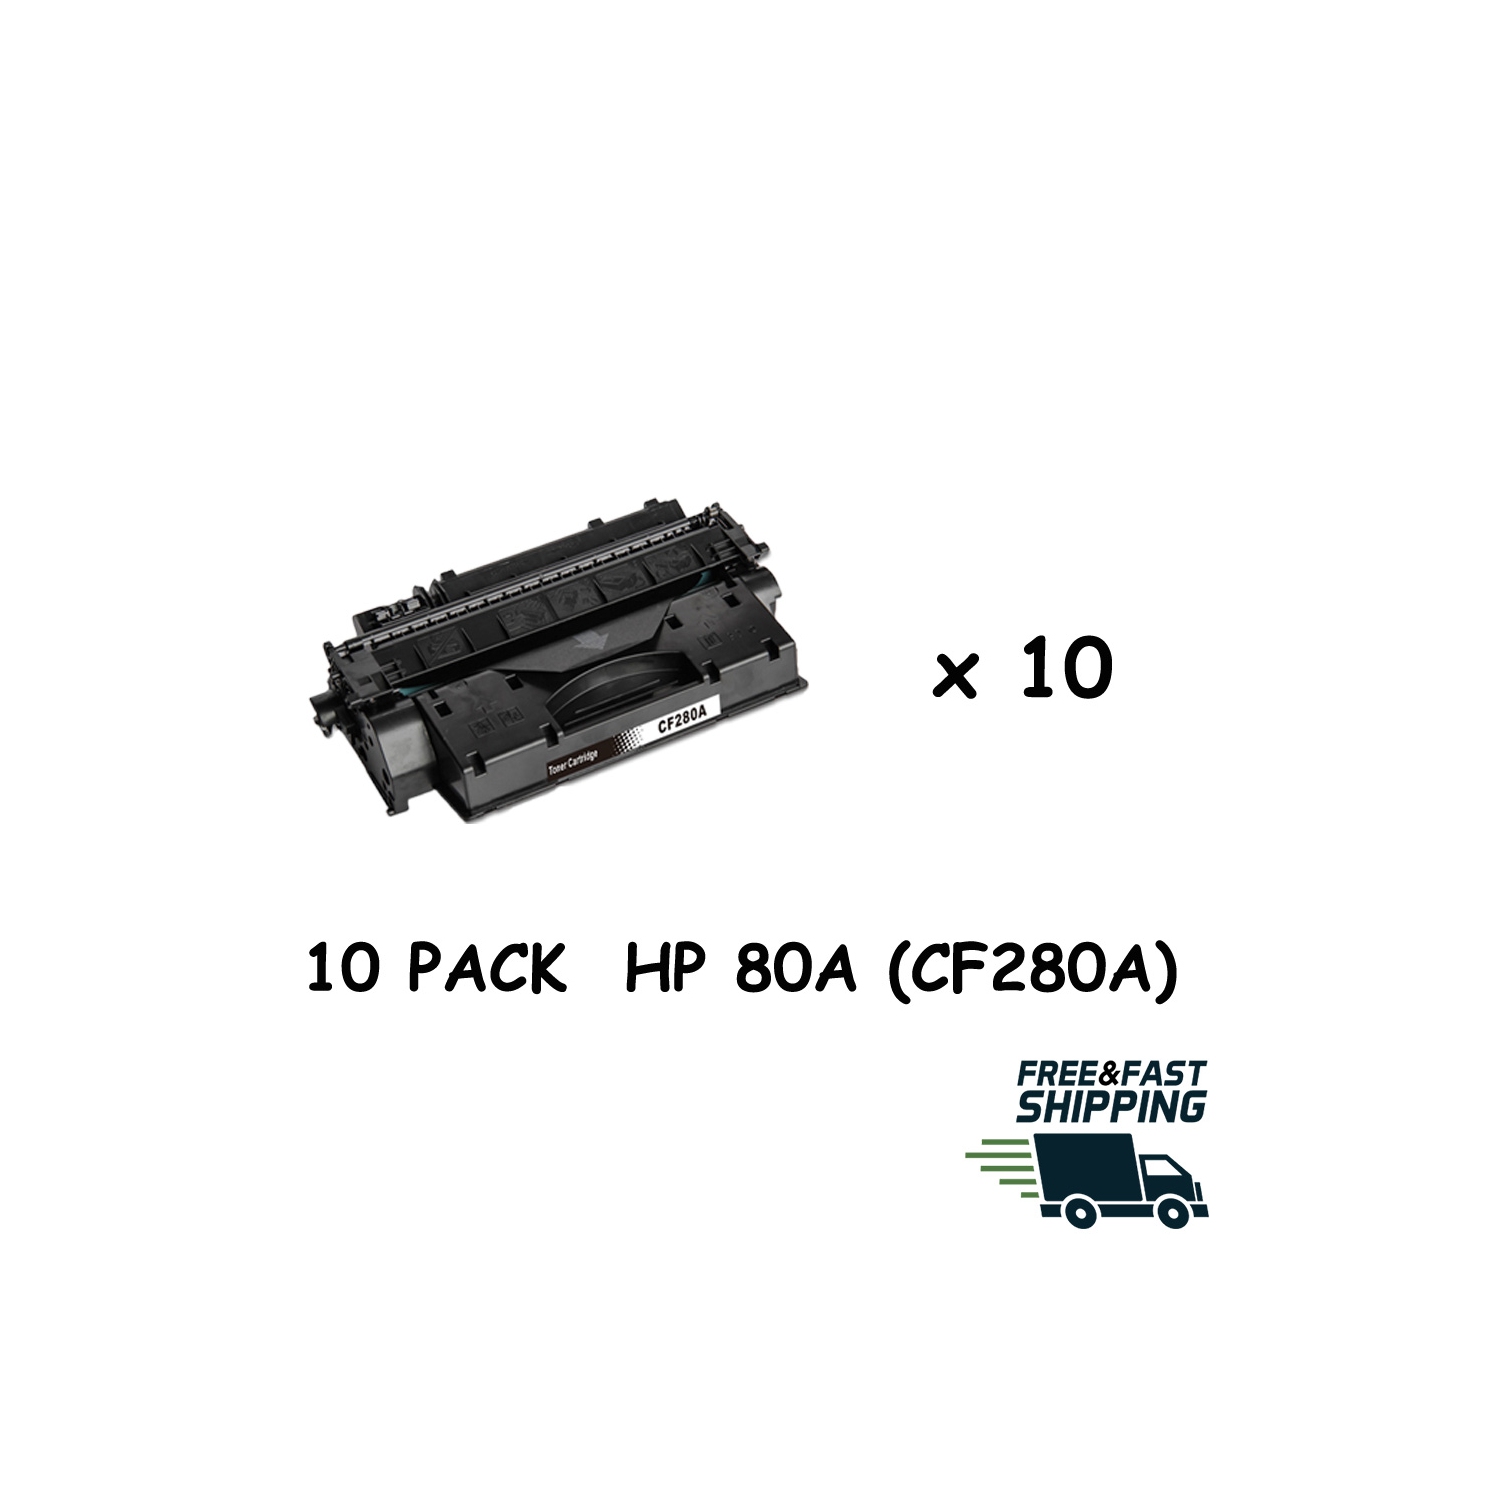 Bestoner™ 10 PK HP 80A (CF280A)/hp80a/80a/HP80A/80A/CF280A/cf280a/cf280/280/80A/80 HP LaserJet Pro M401 M425d